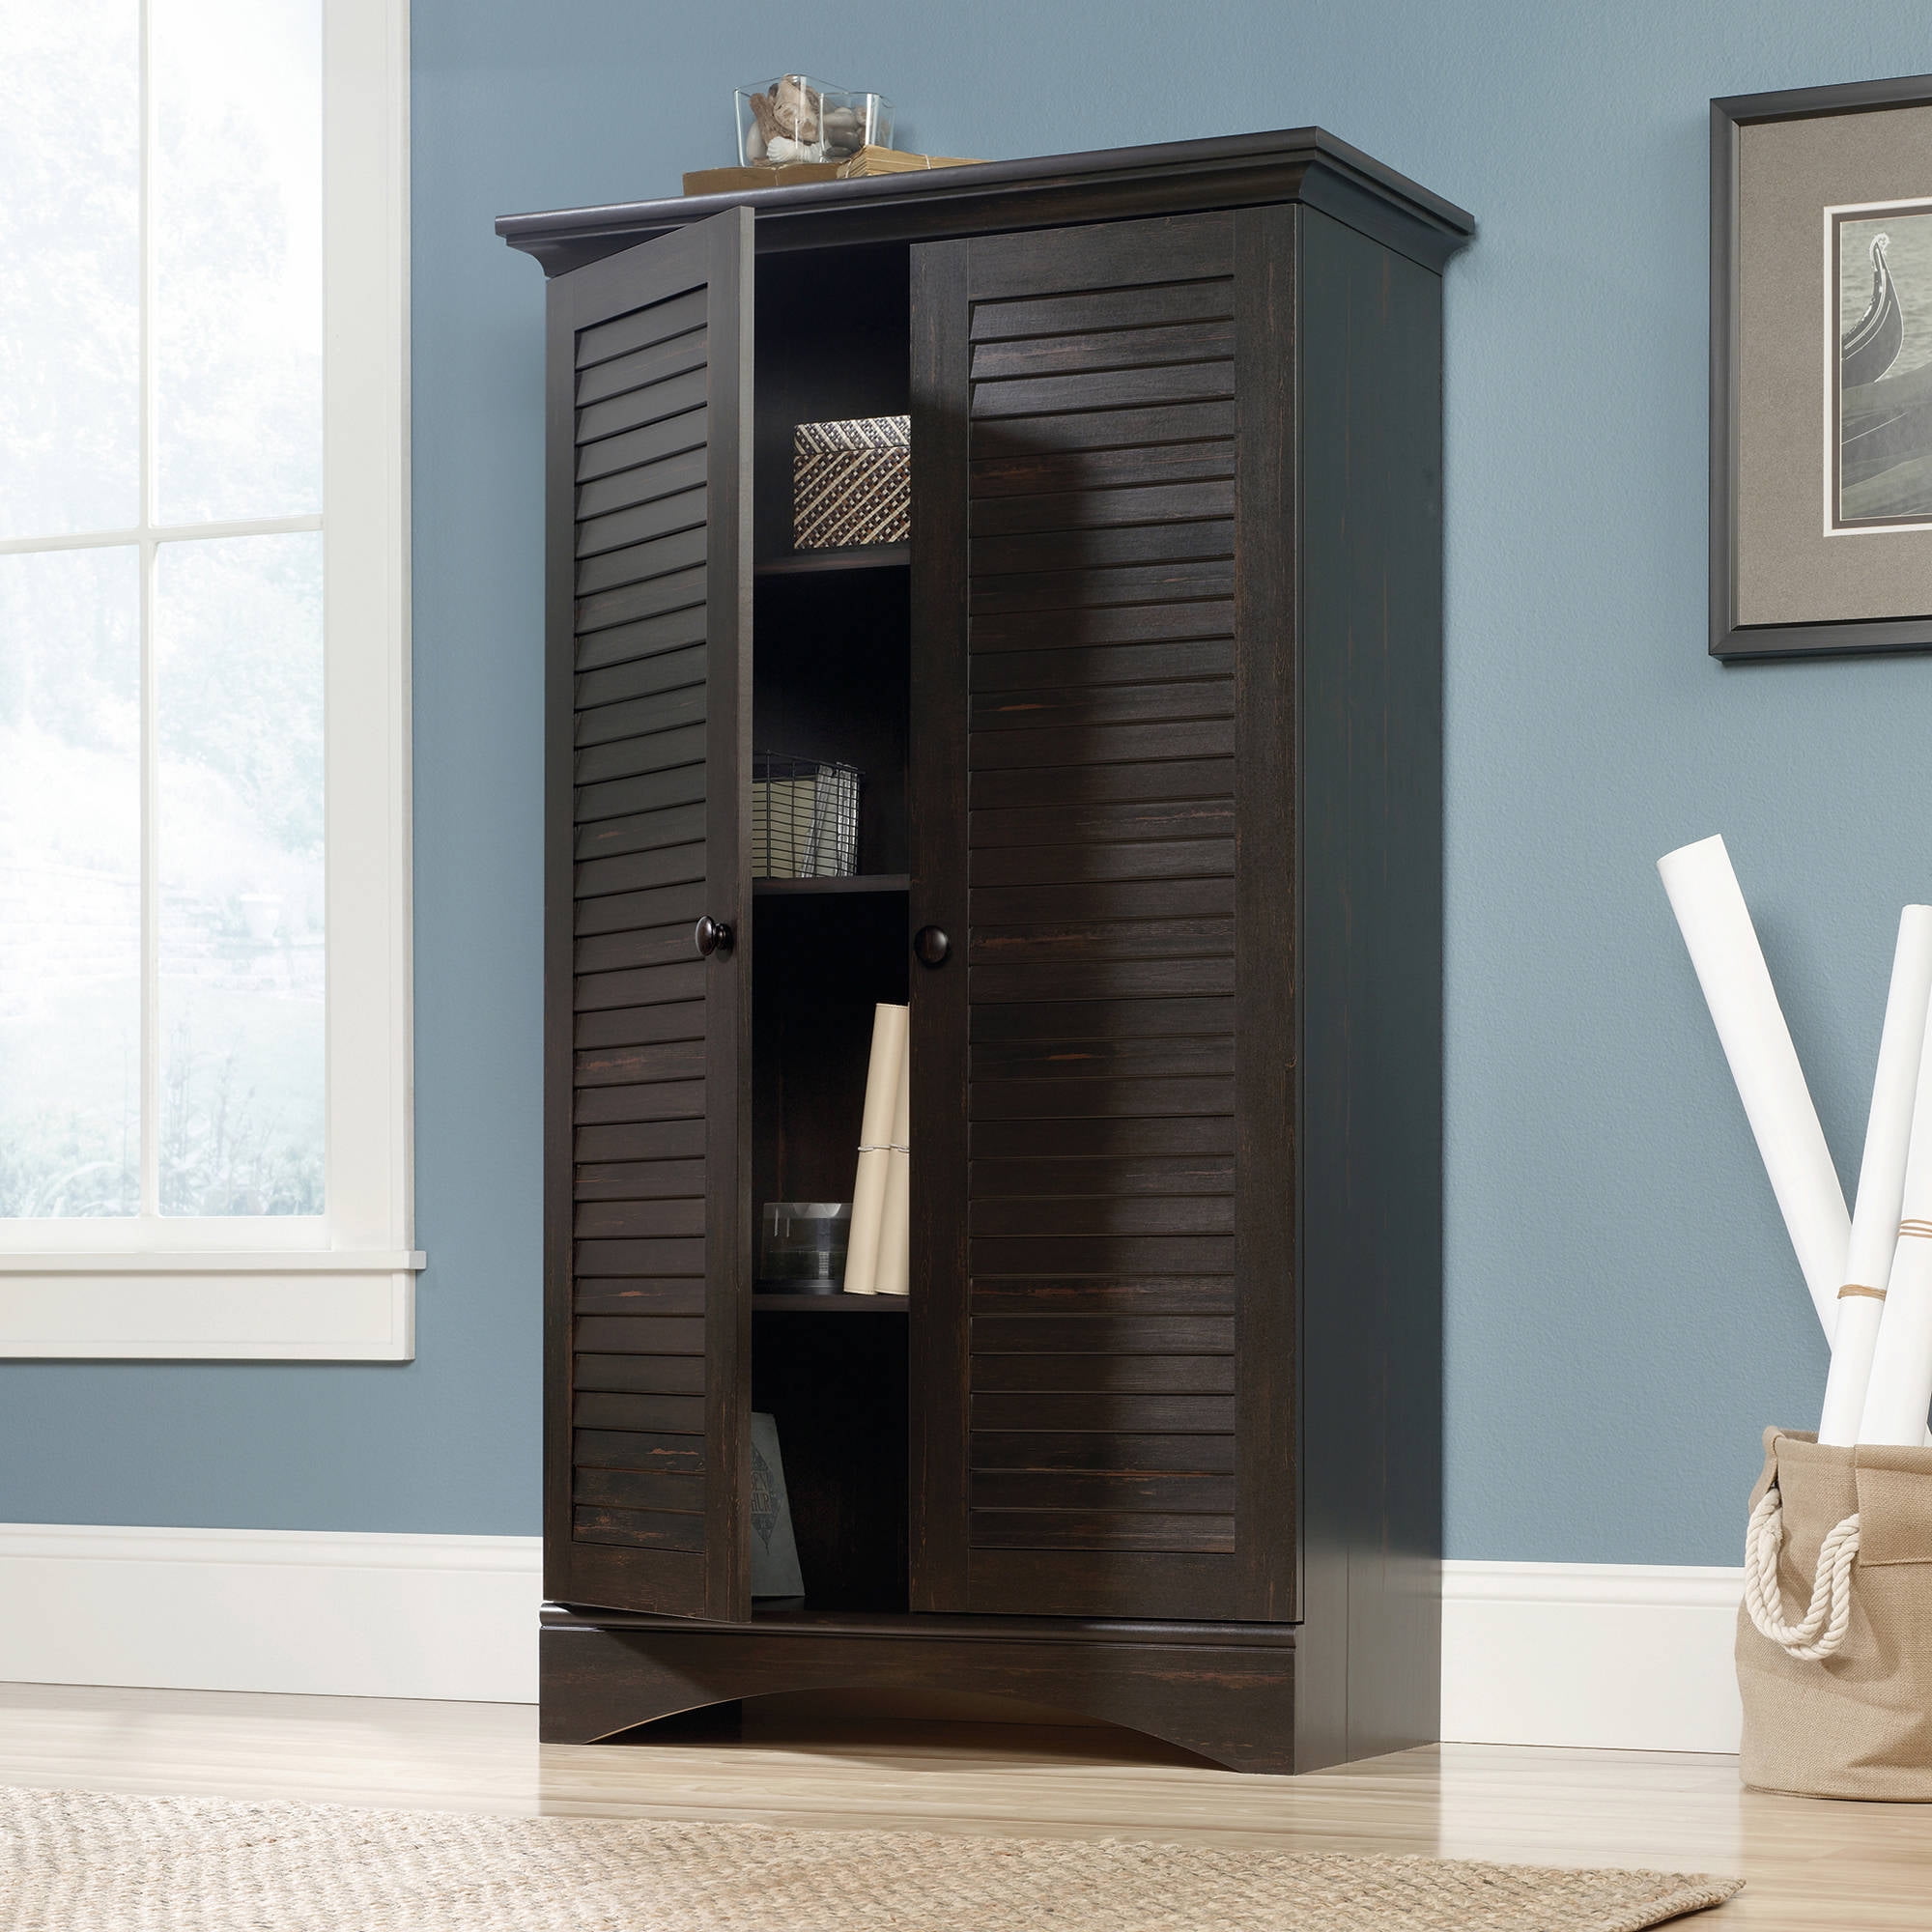 Tall Storage Cabinet Kitchen Pantry Cupboard Organizer Furniture 4 Doors Shelves 